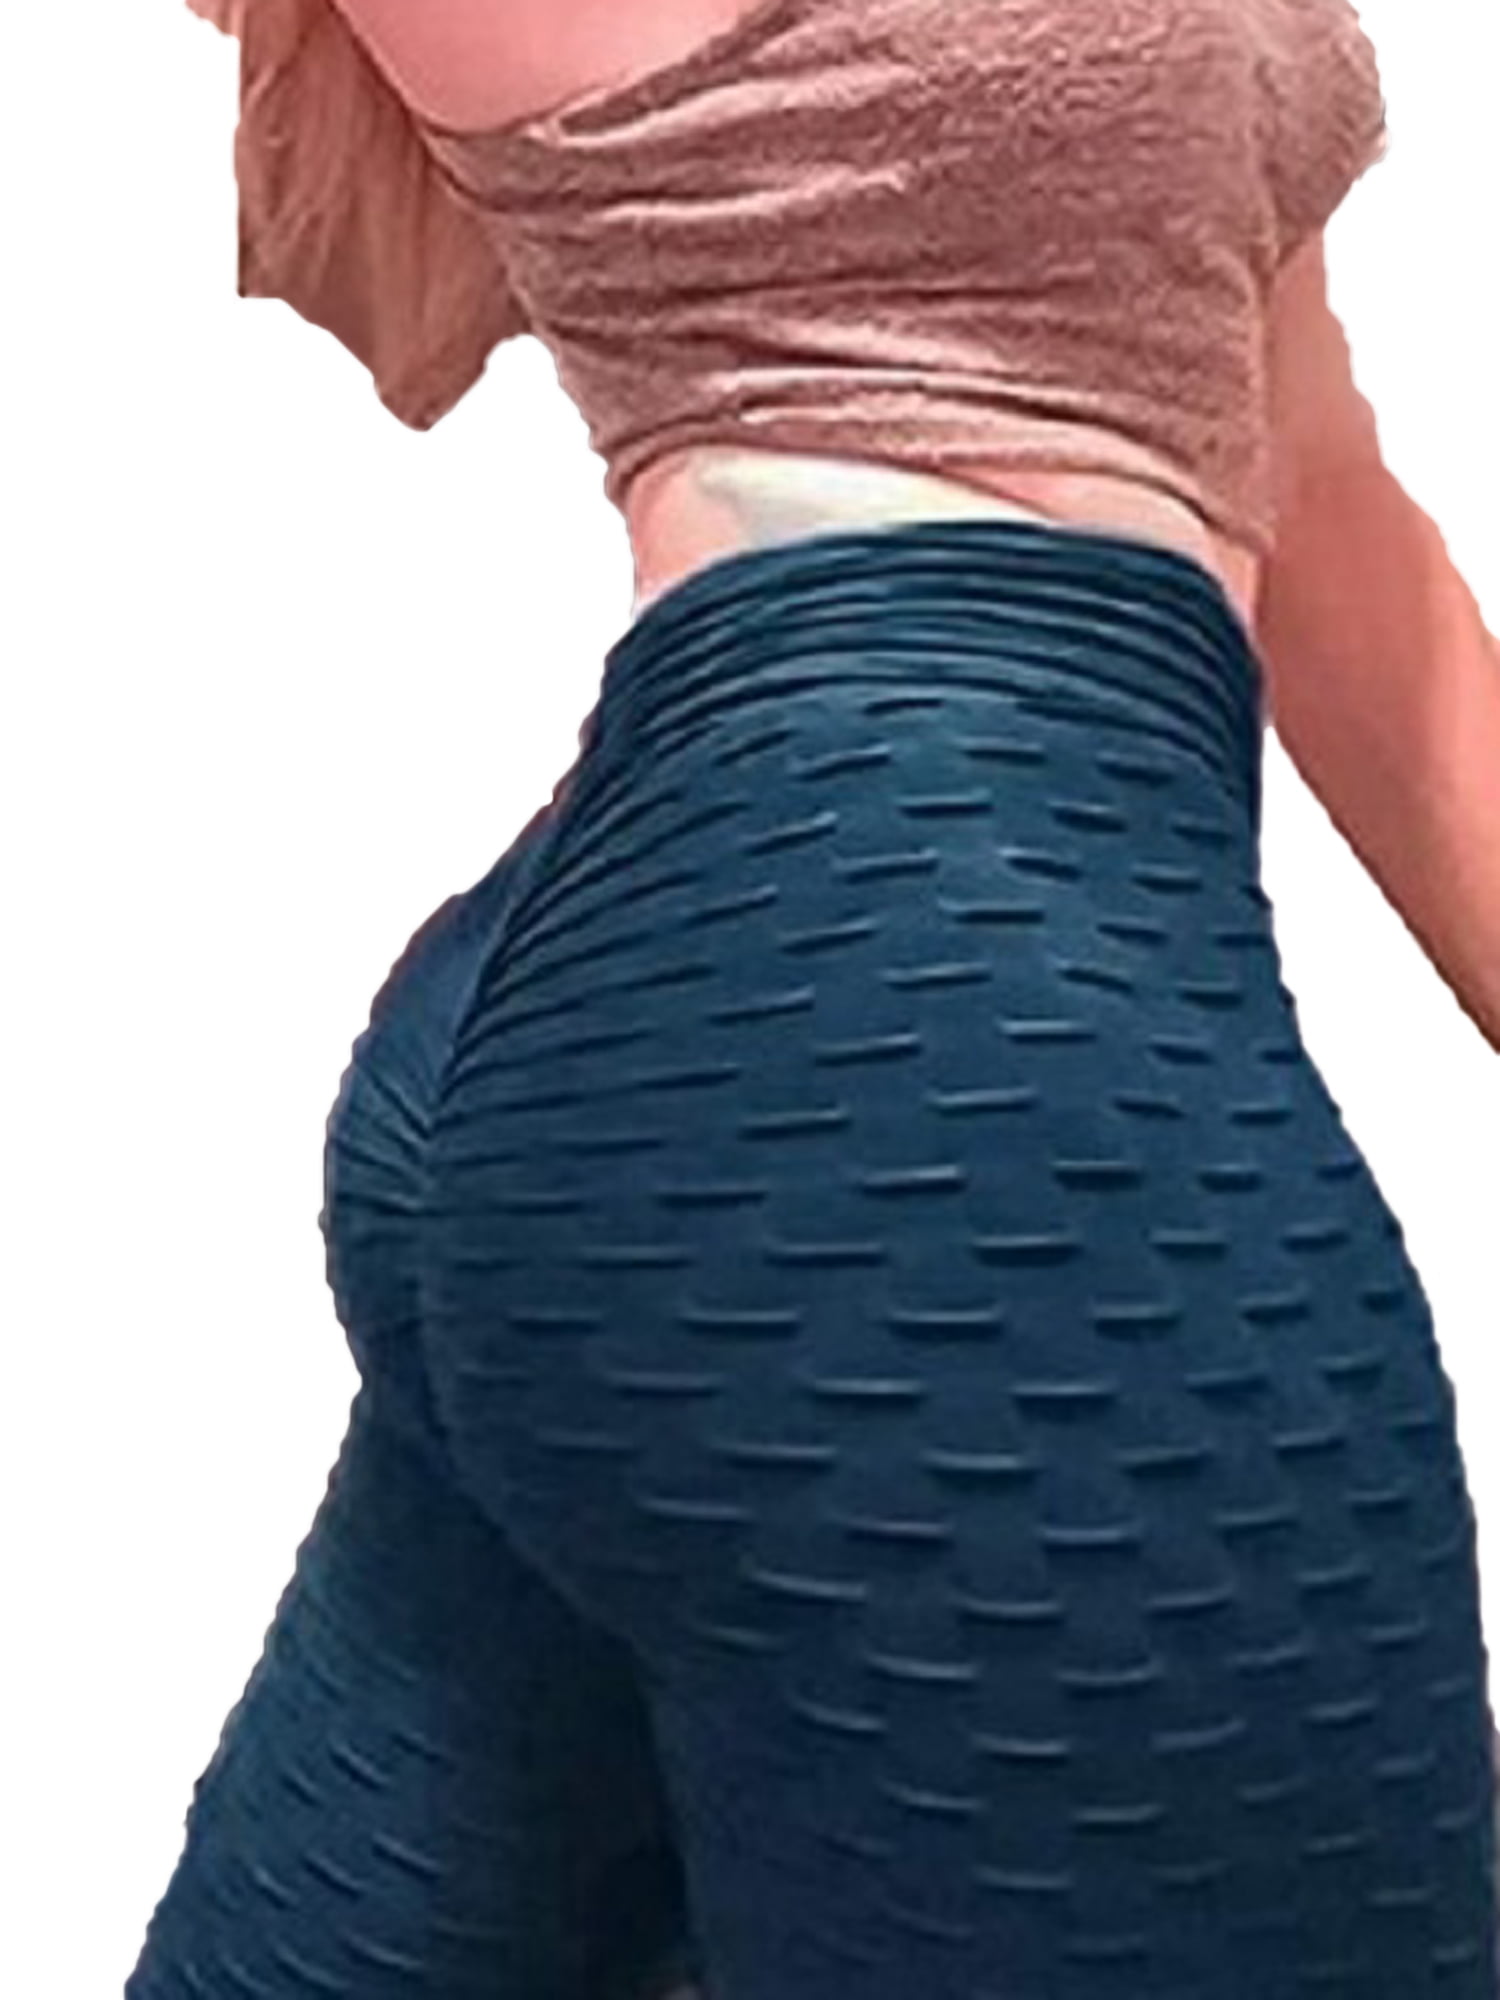 Women Yoga Gym Anti Cellulite Compression Leggings Butt Lift Elastic Pants 